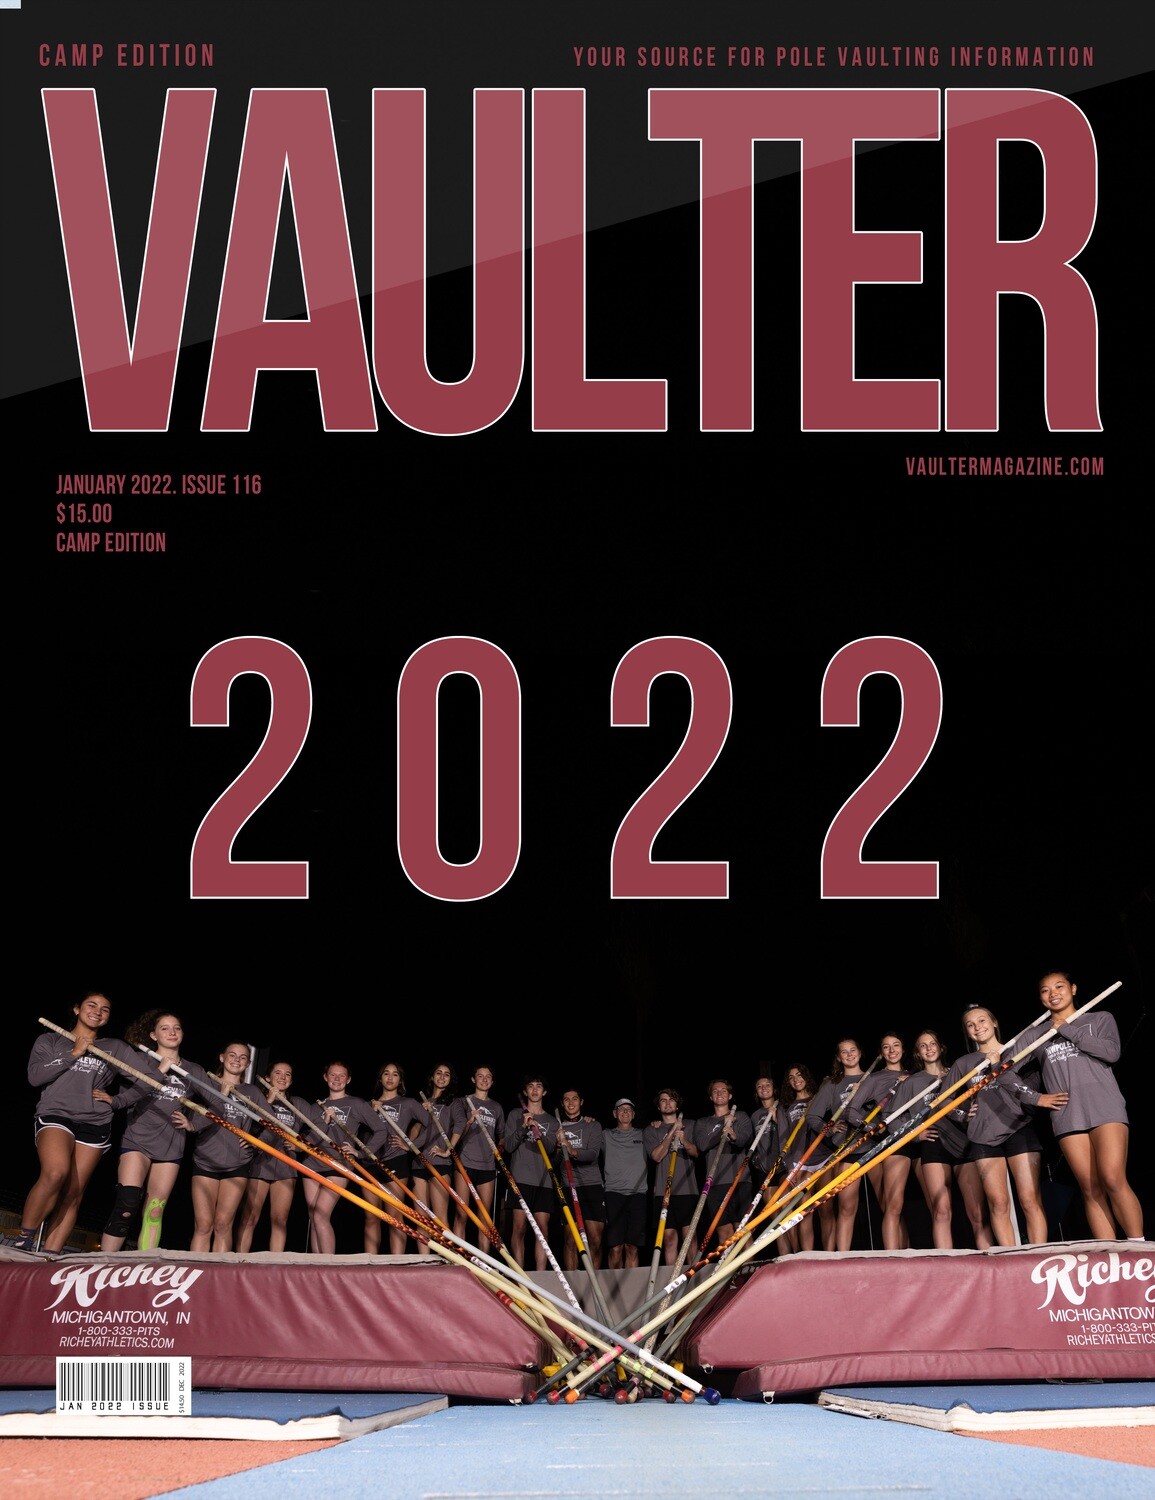 January Camp 2022 Issue of Vaulter Magazine U.S. Standard Mail